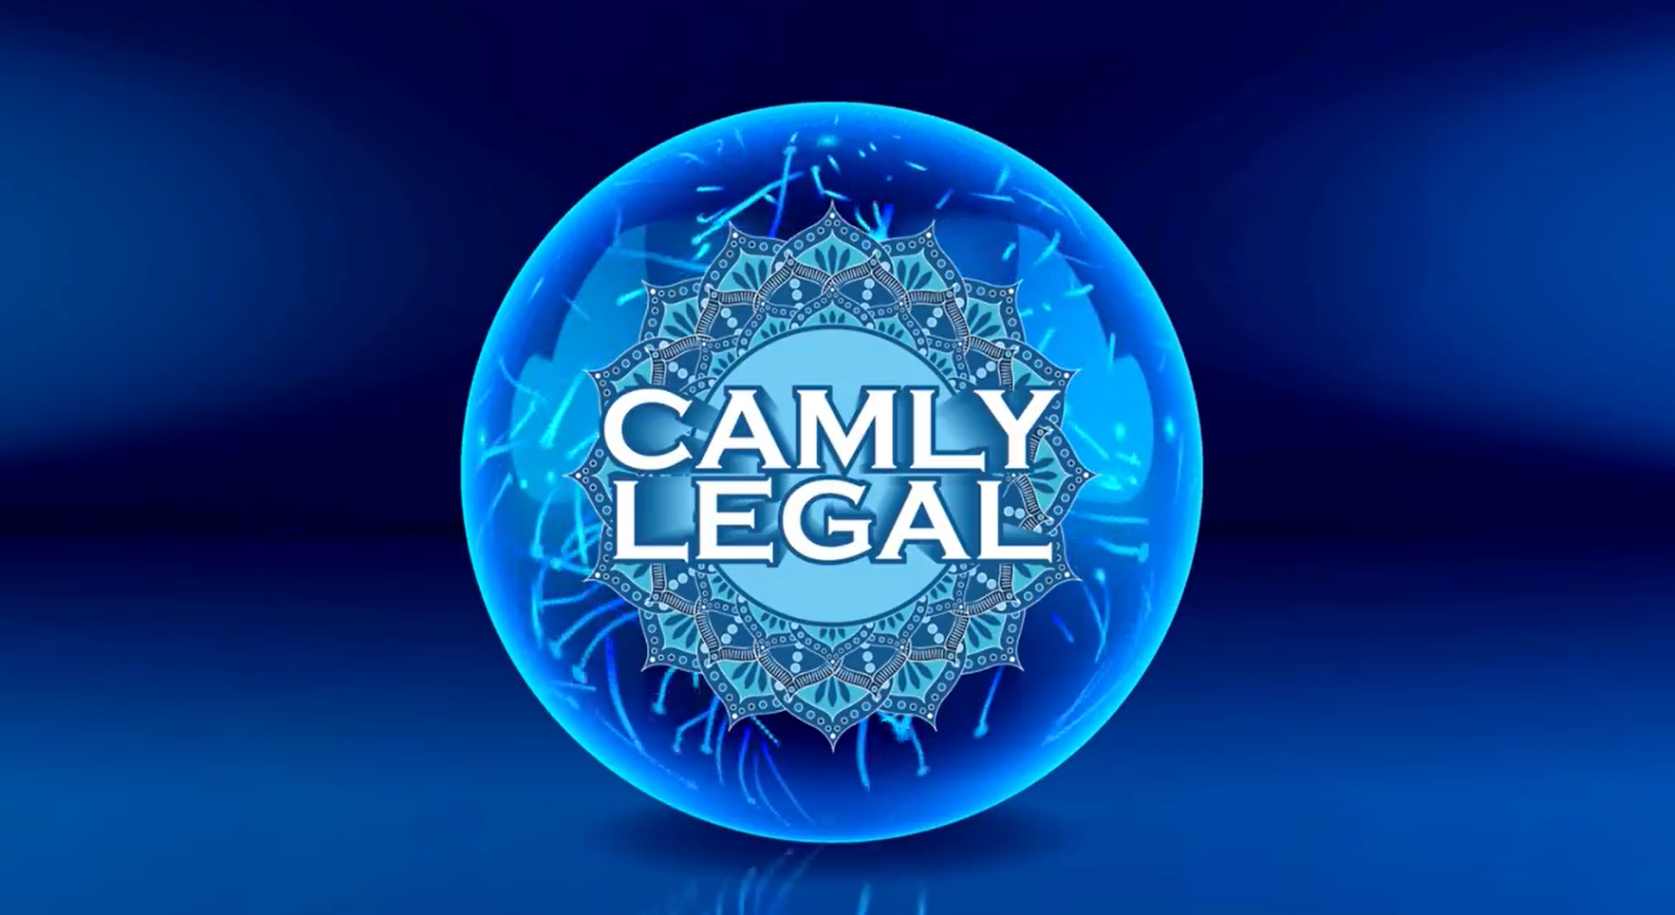 Camly legal